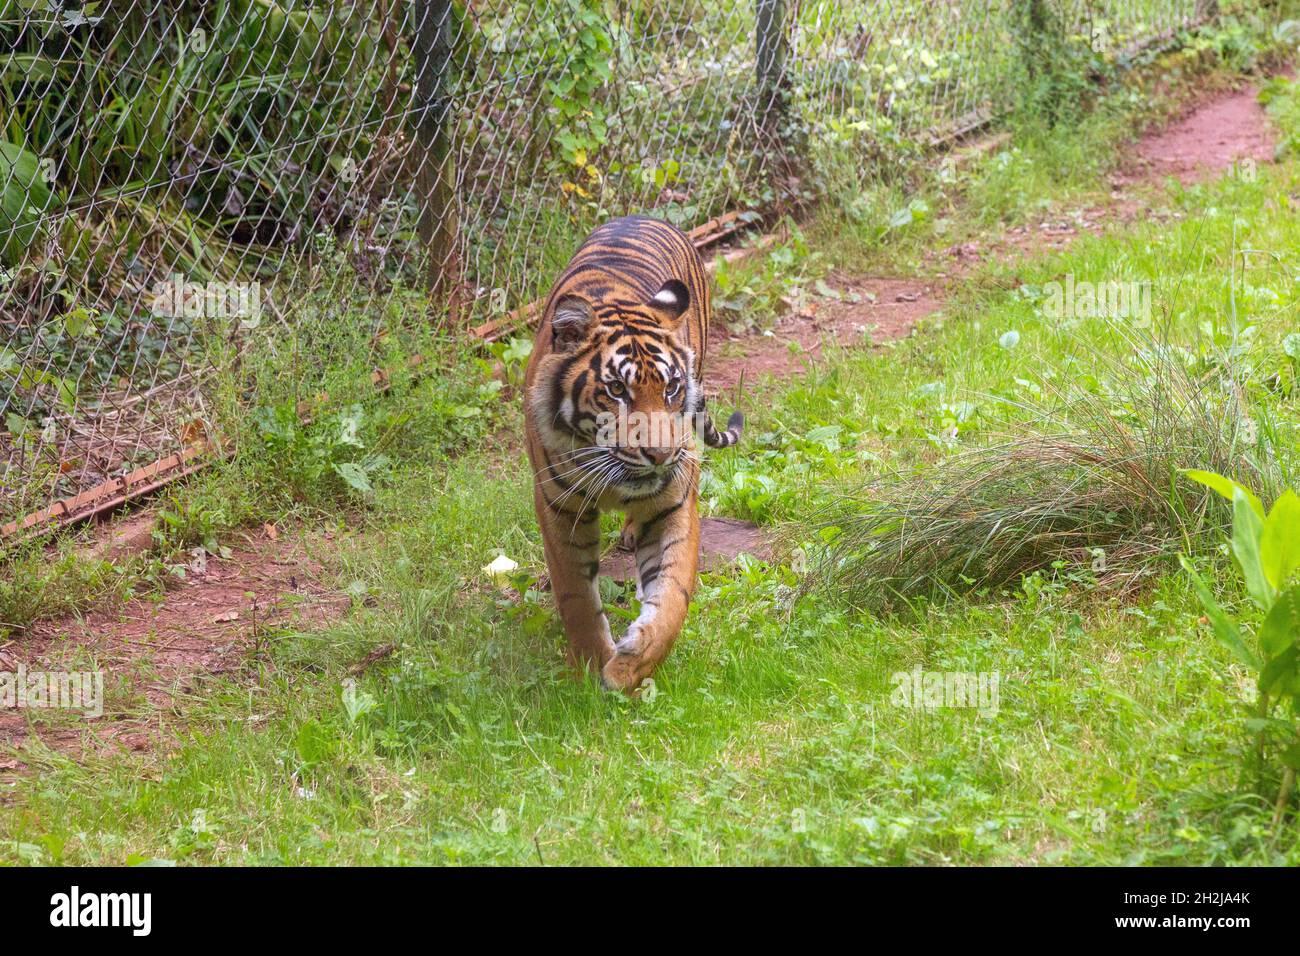 Sumatra-Tiger im Paignton Zoo, Devon, England, Vereinigtes Königreich. Stockfoto